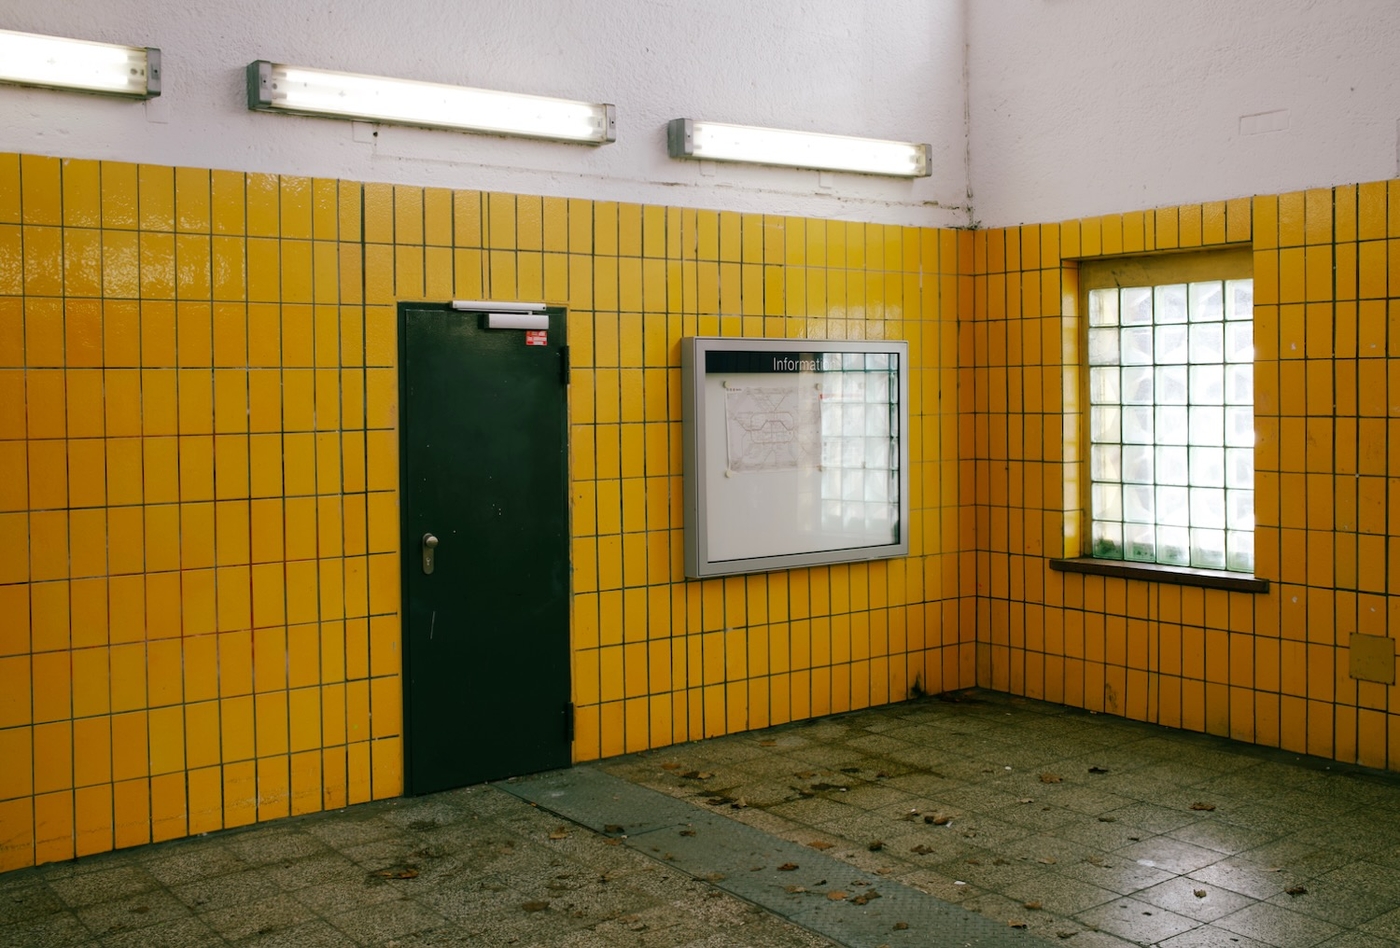 A yellow tiled metro station interior